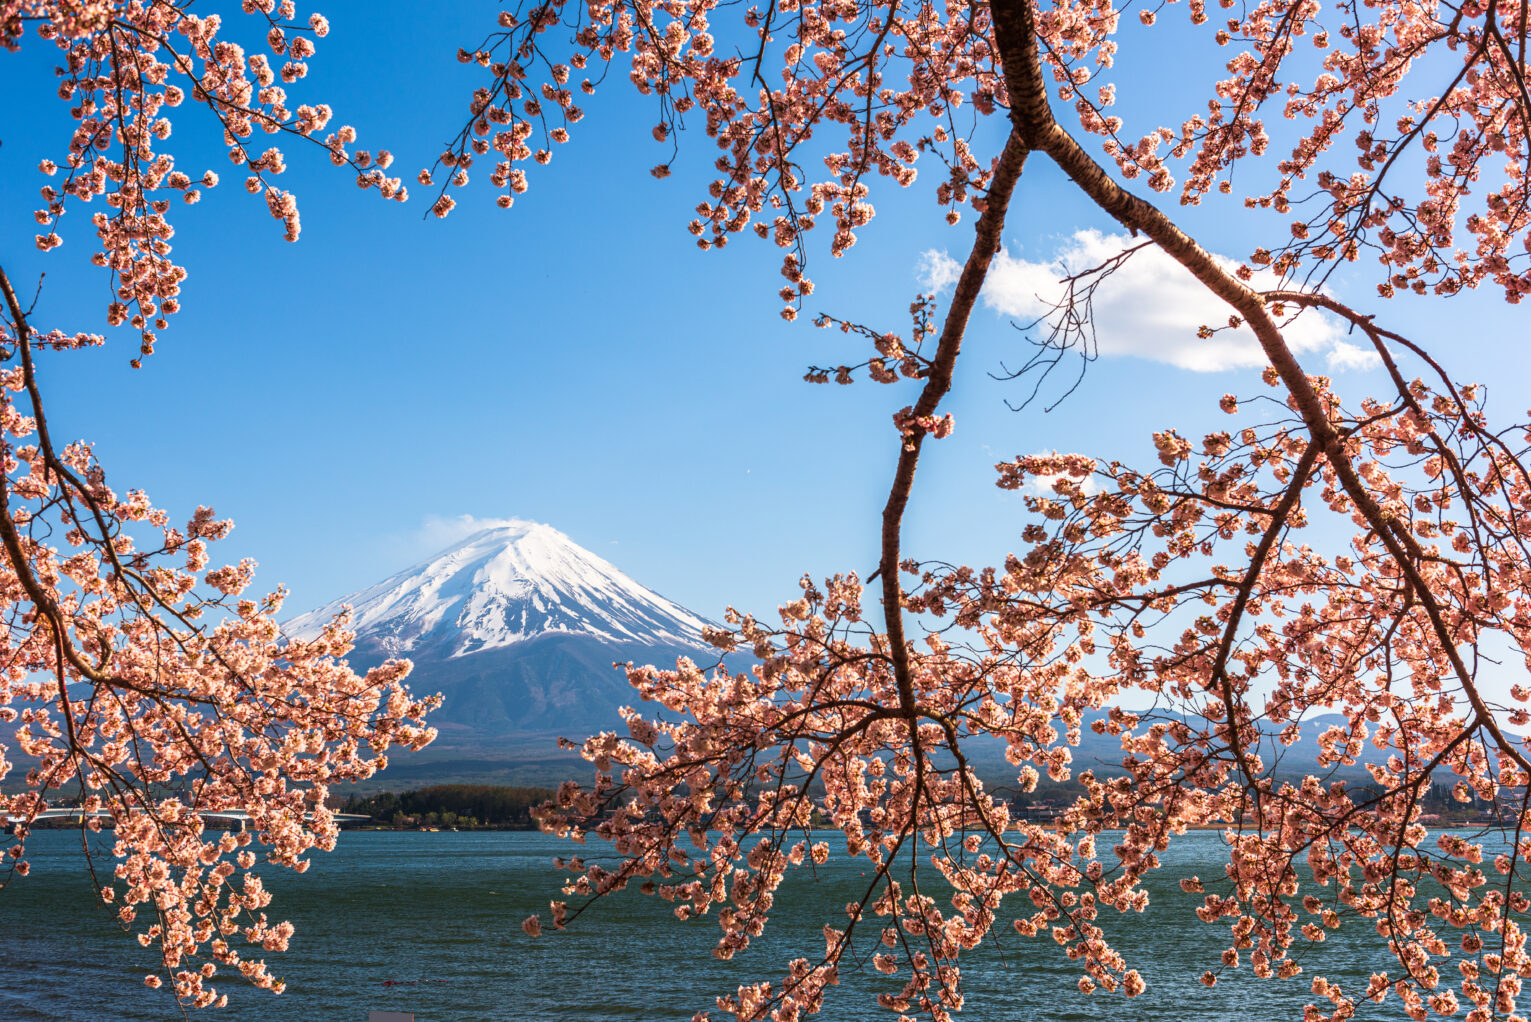 Mt.Fuji Japan at cherry blossom time